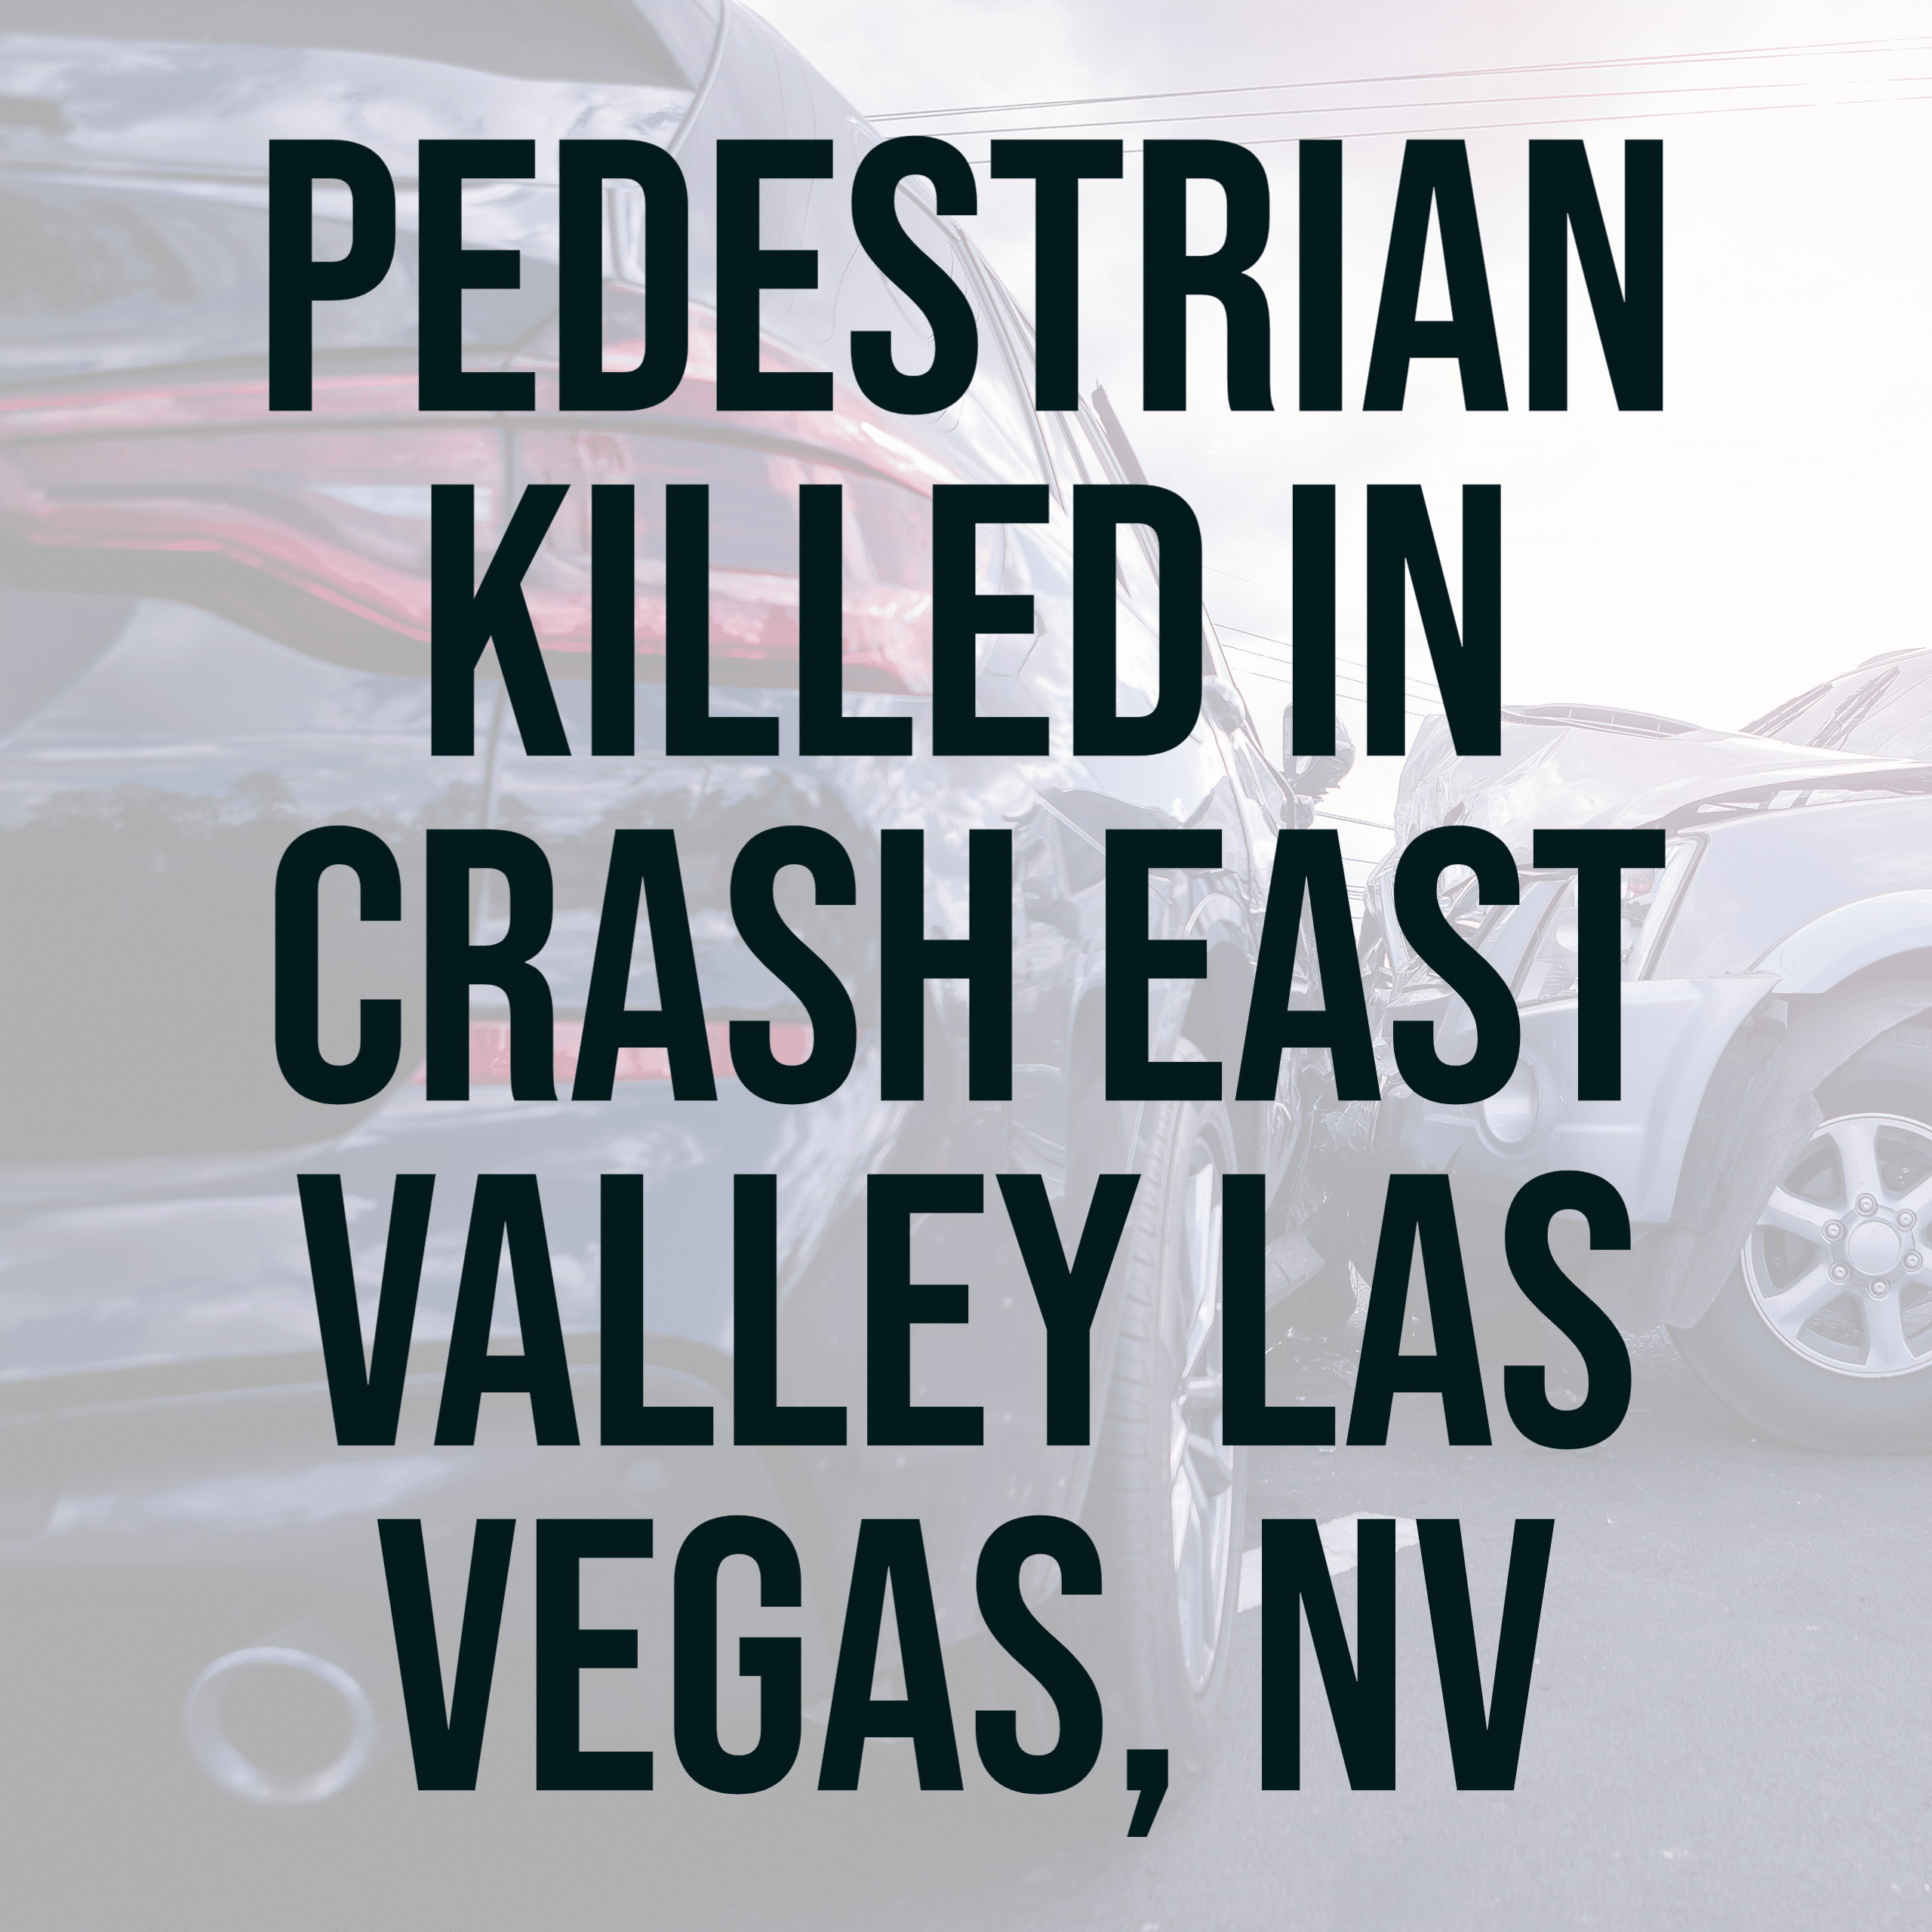 Pedestrian Killed in Crash East Valley Las Vegas, NV